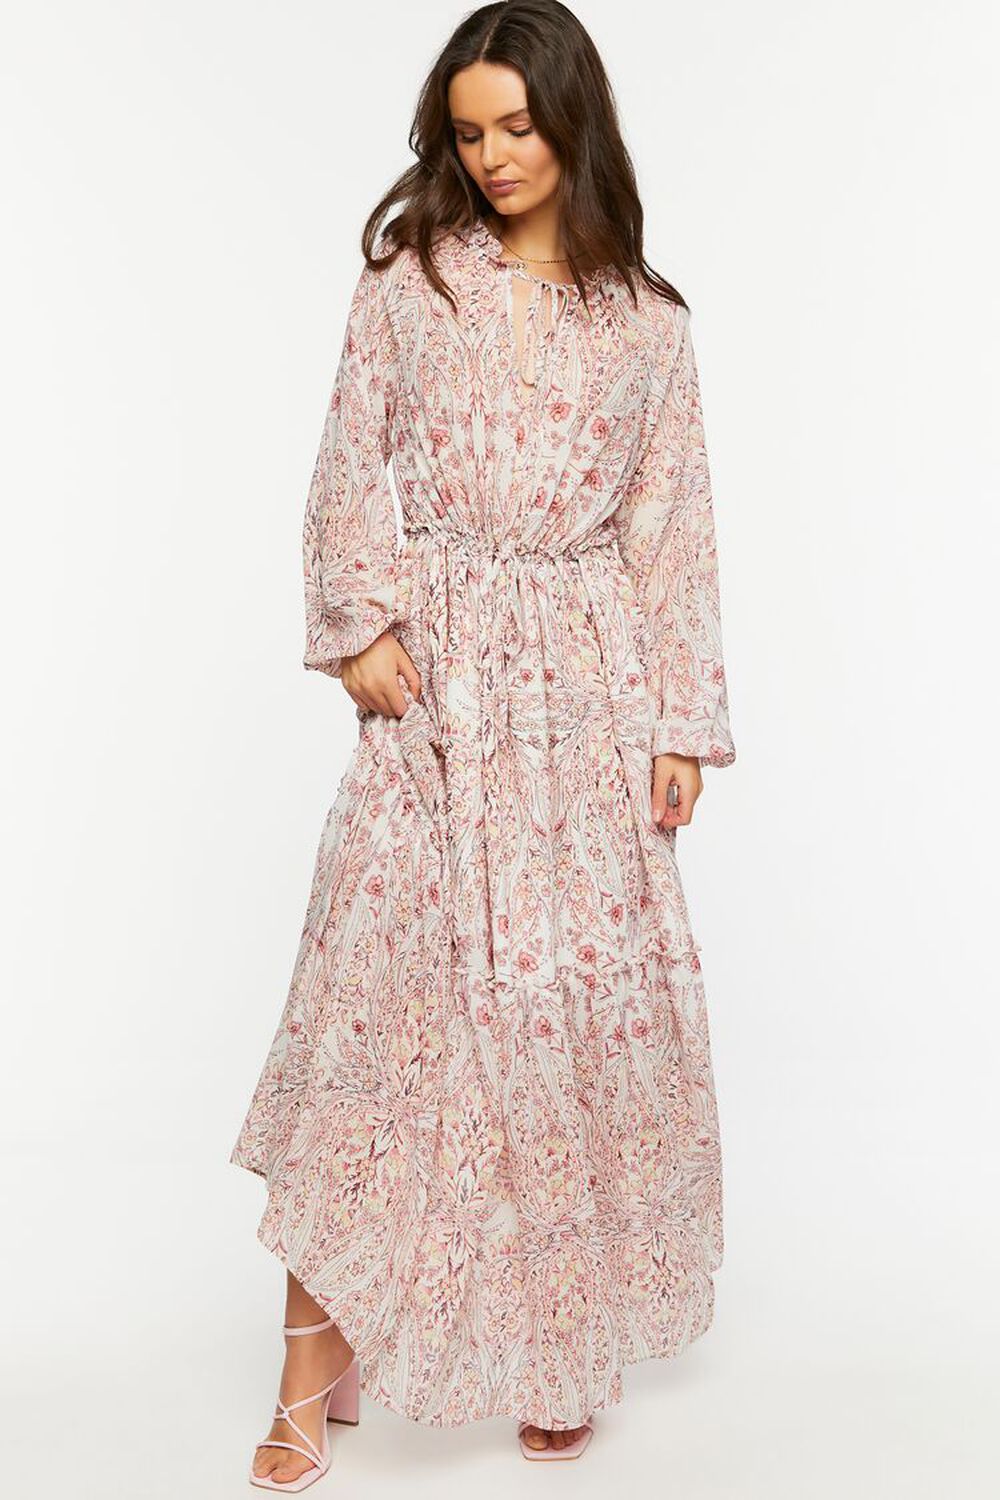 IVORY/MULTI Chiffon Floral Print Maxi Dress, image 1